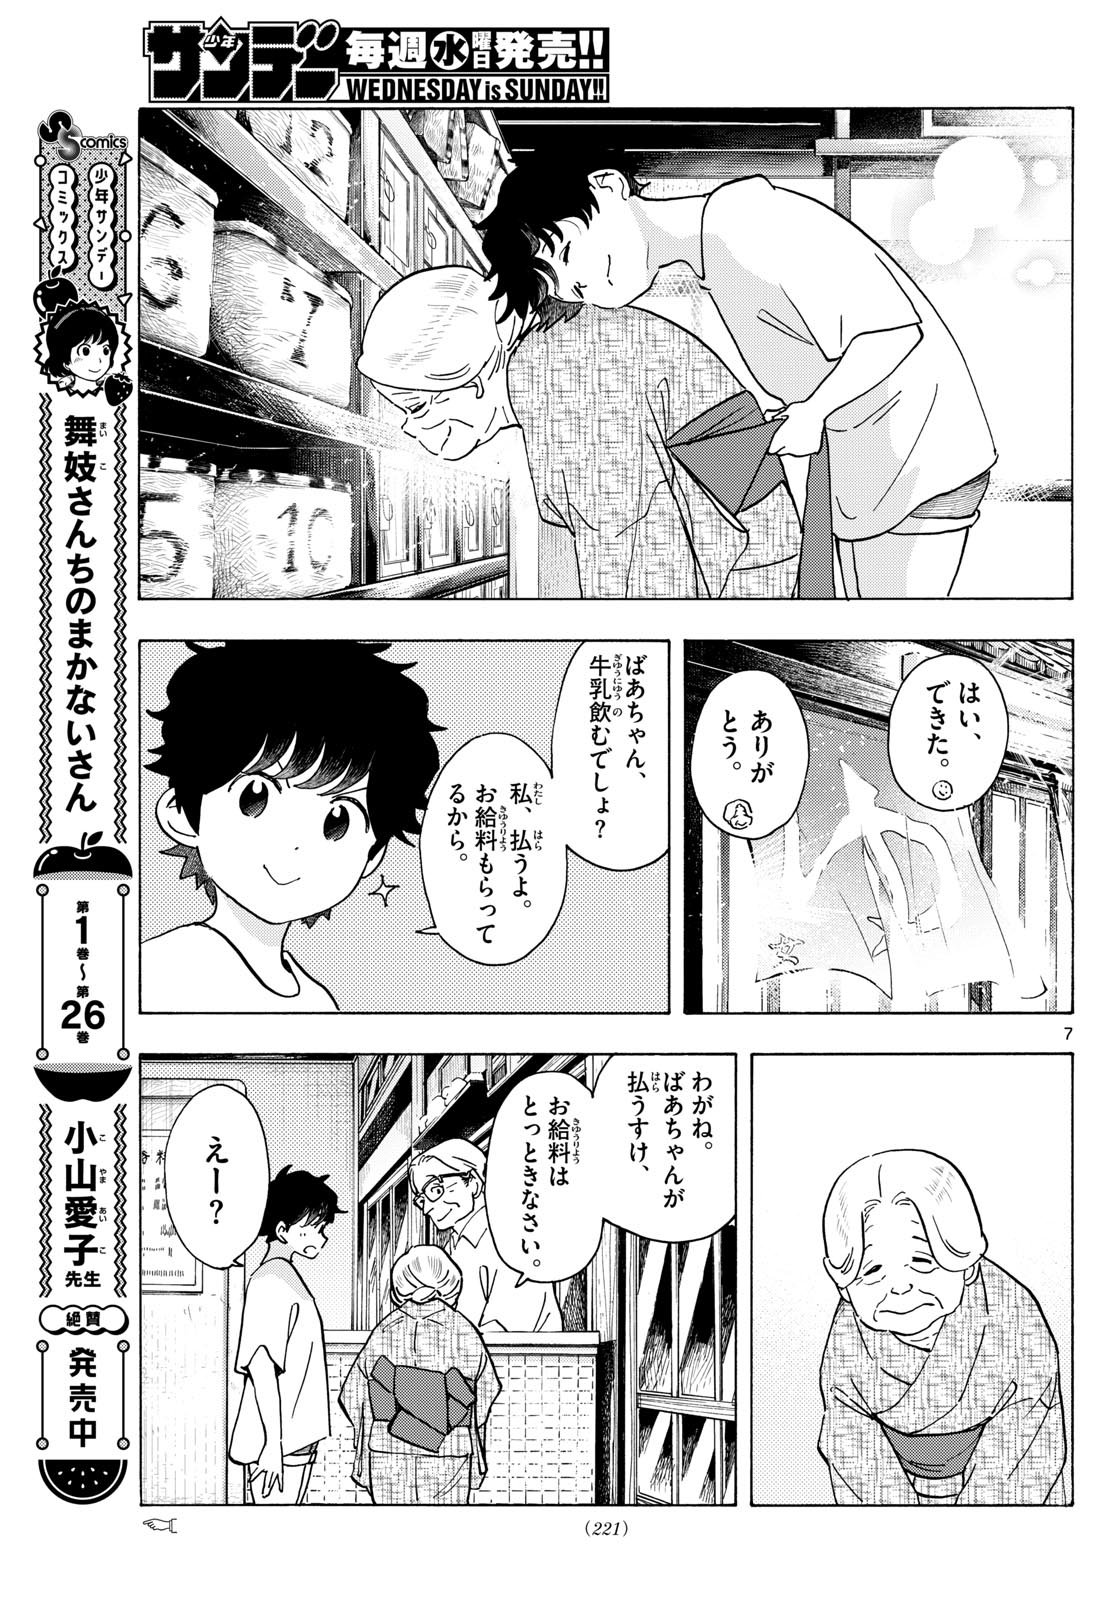 Maiko-san Chi no Makanai-san - Chapter 305 - Page 7